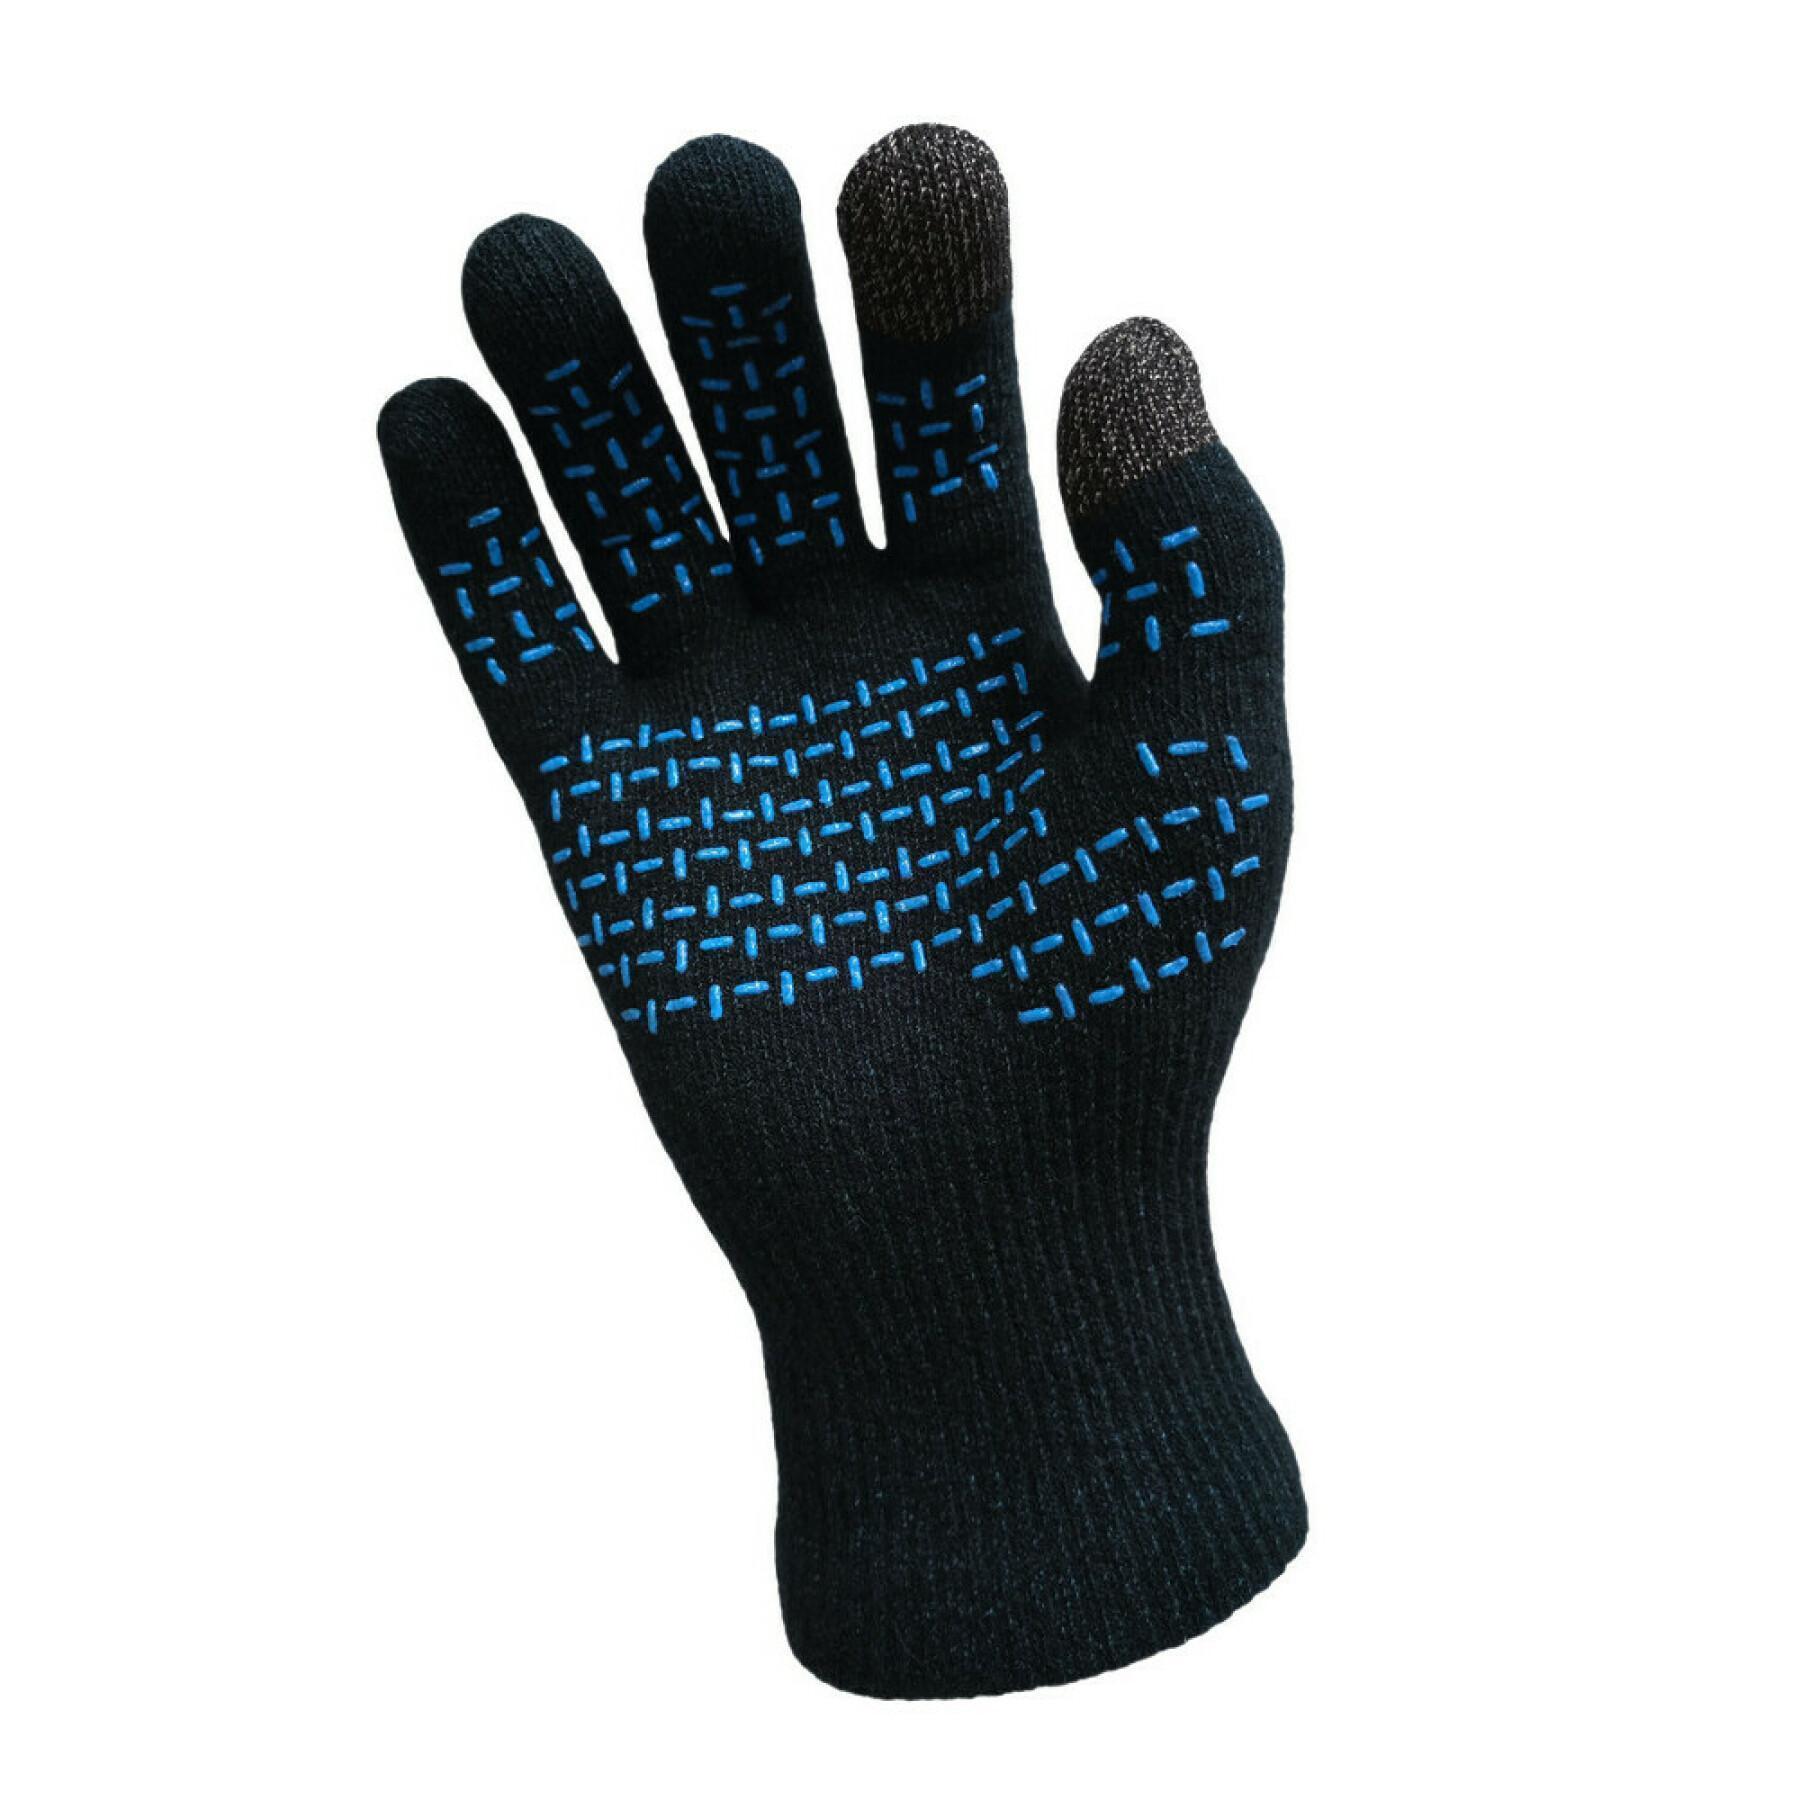 Handschuhe Dexshell ultralite